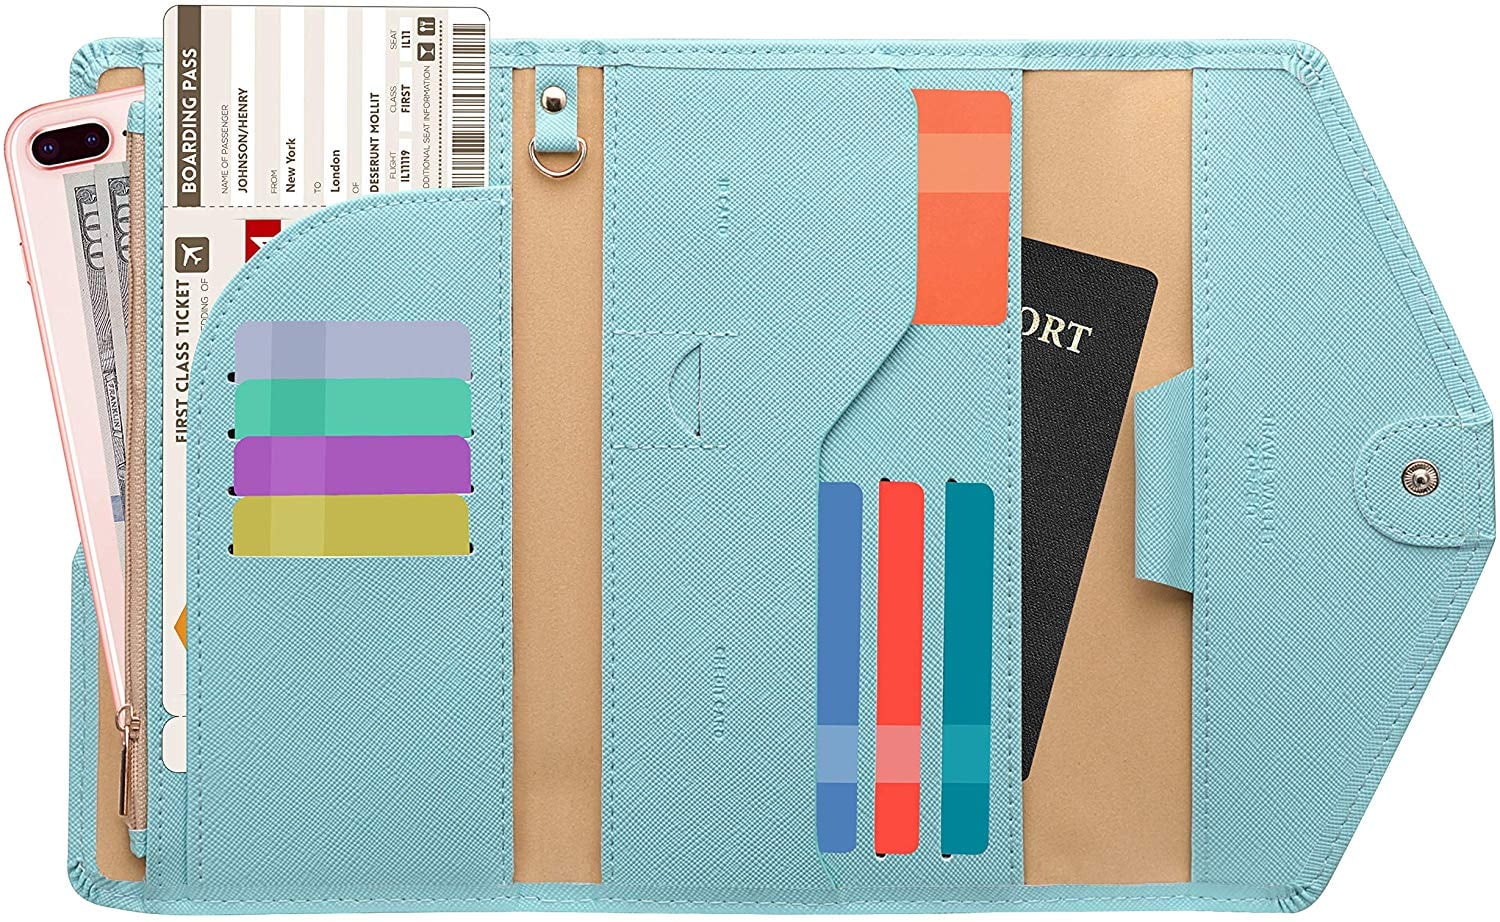 Zoppen + Multi-Purpose Travel Wallet